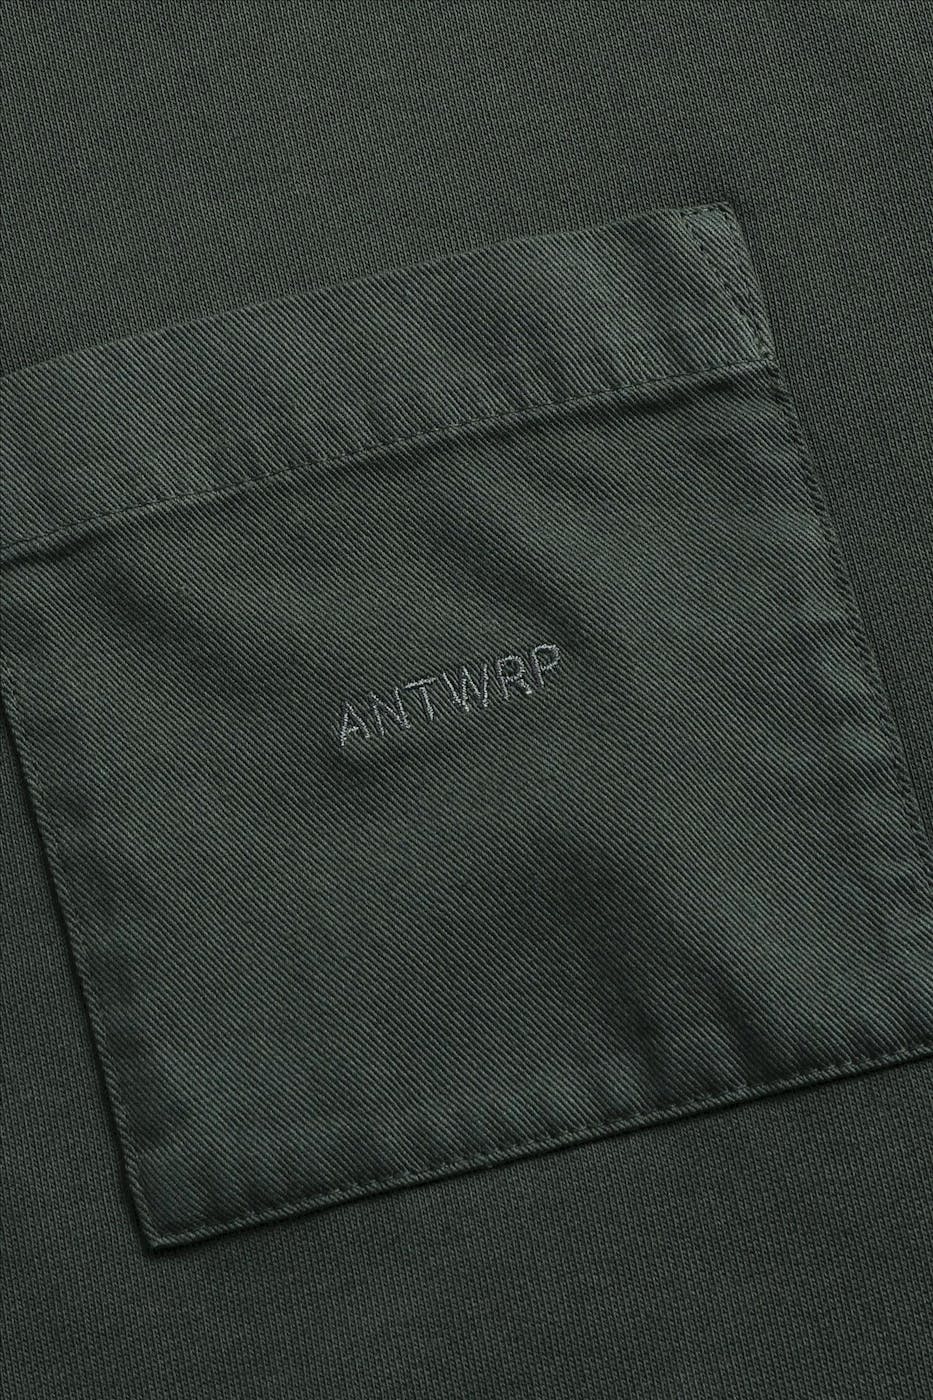 Antwrp - Donkergroene Chest Pocket sweater